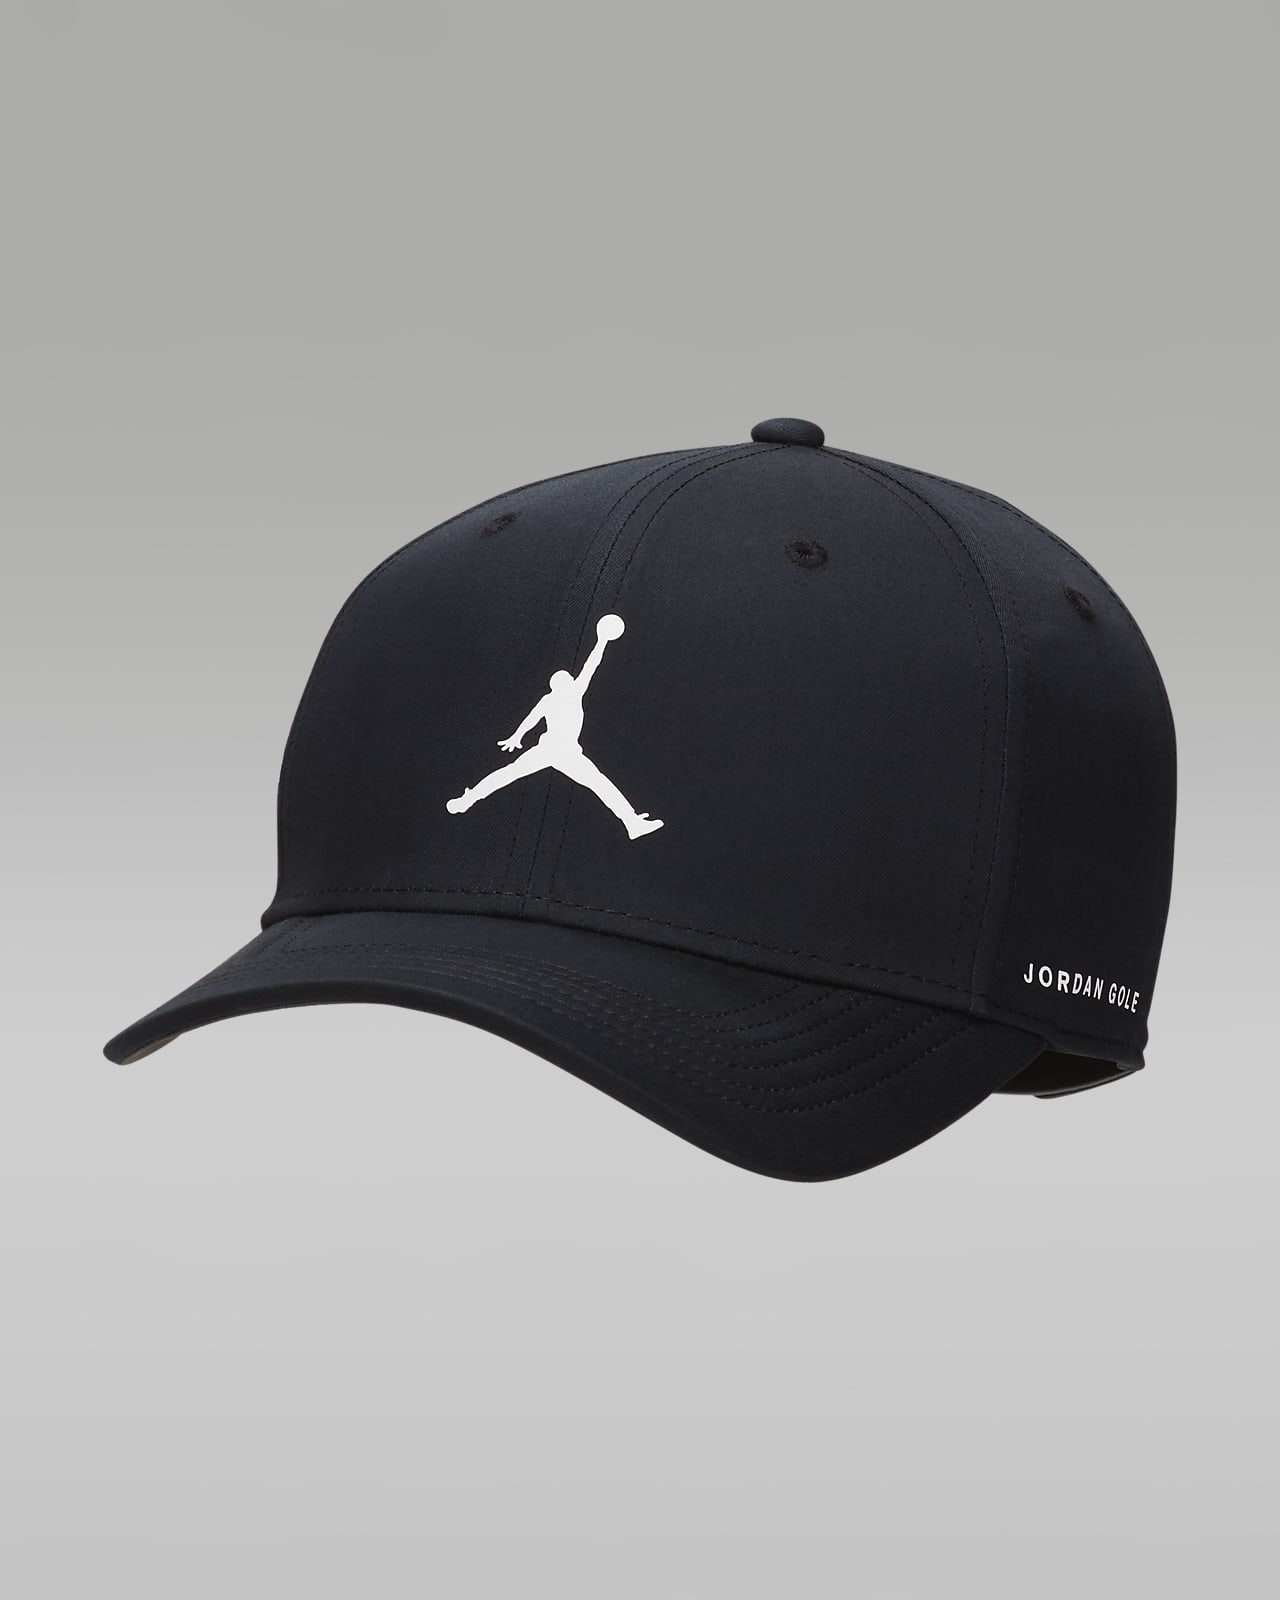 Golf Rise Cap Adjustable Structured Hat. Nike